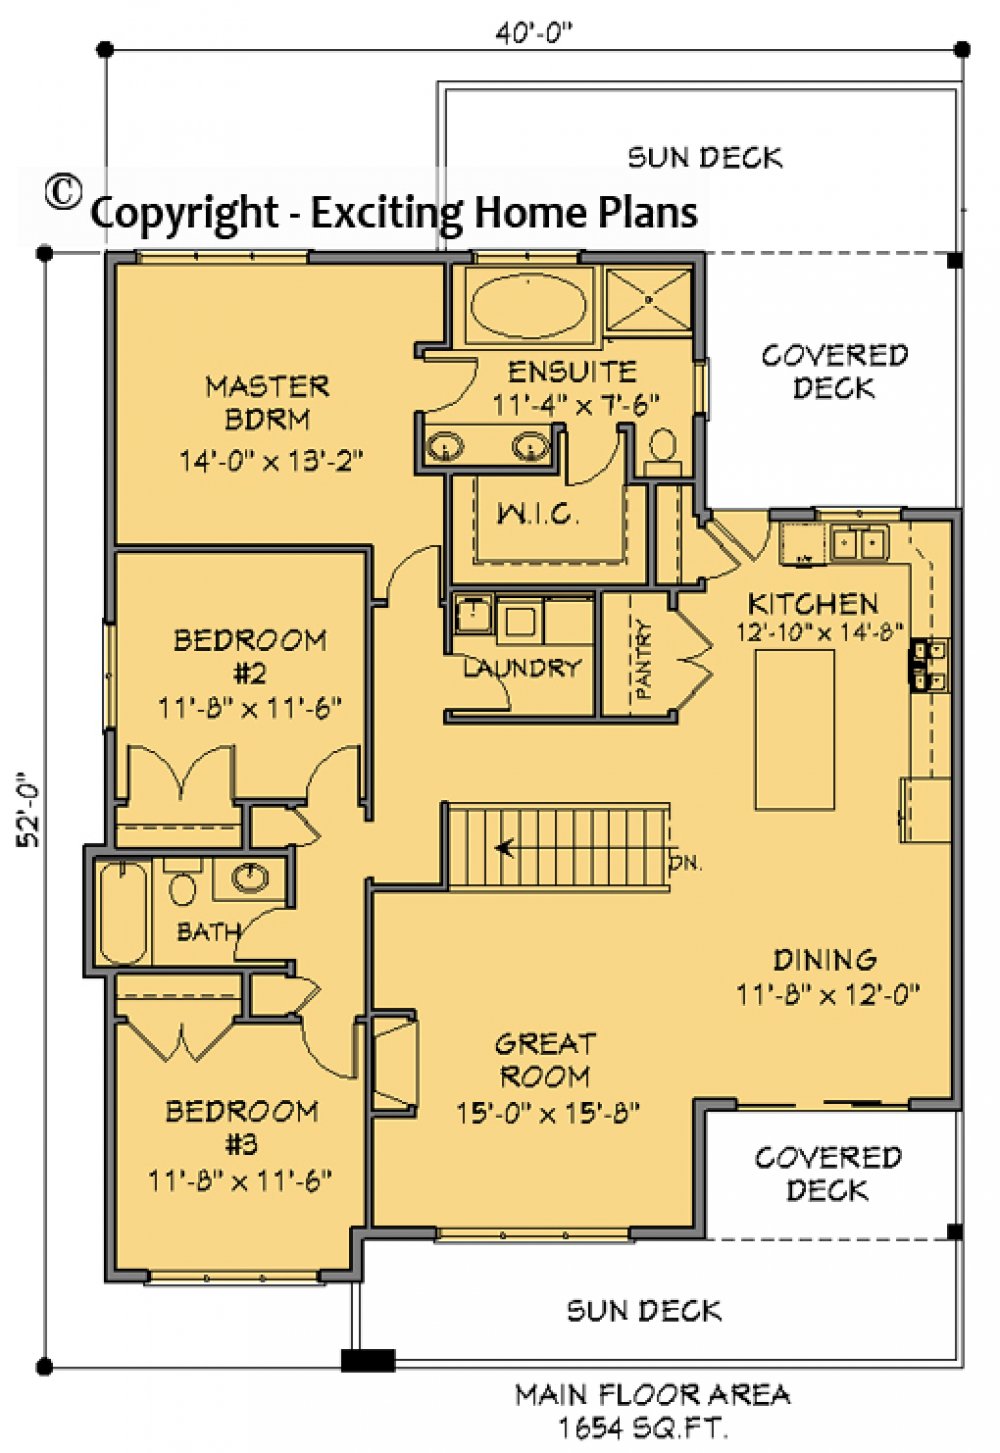 House Plan E1739-10  Main Floor Plan